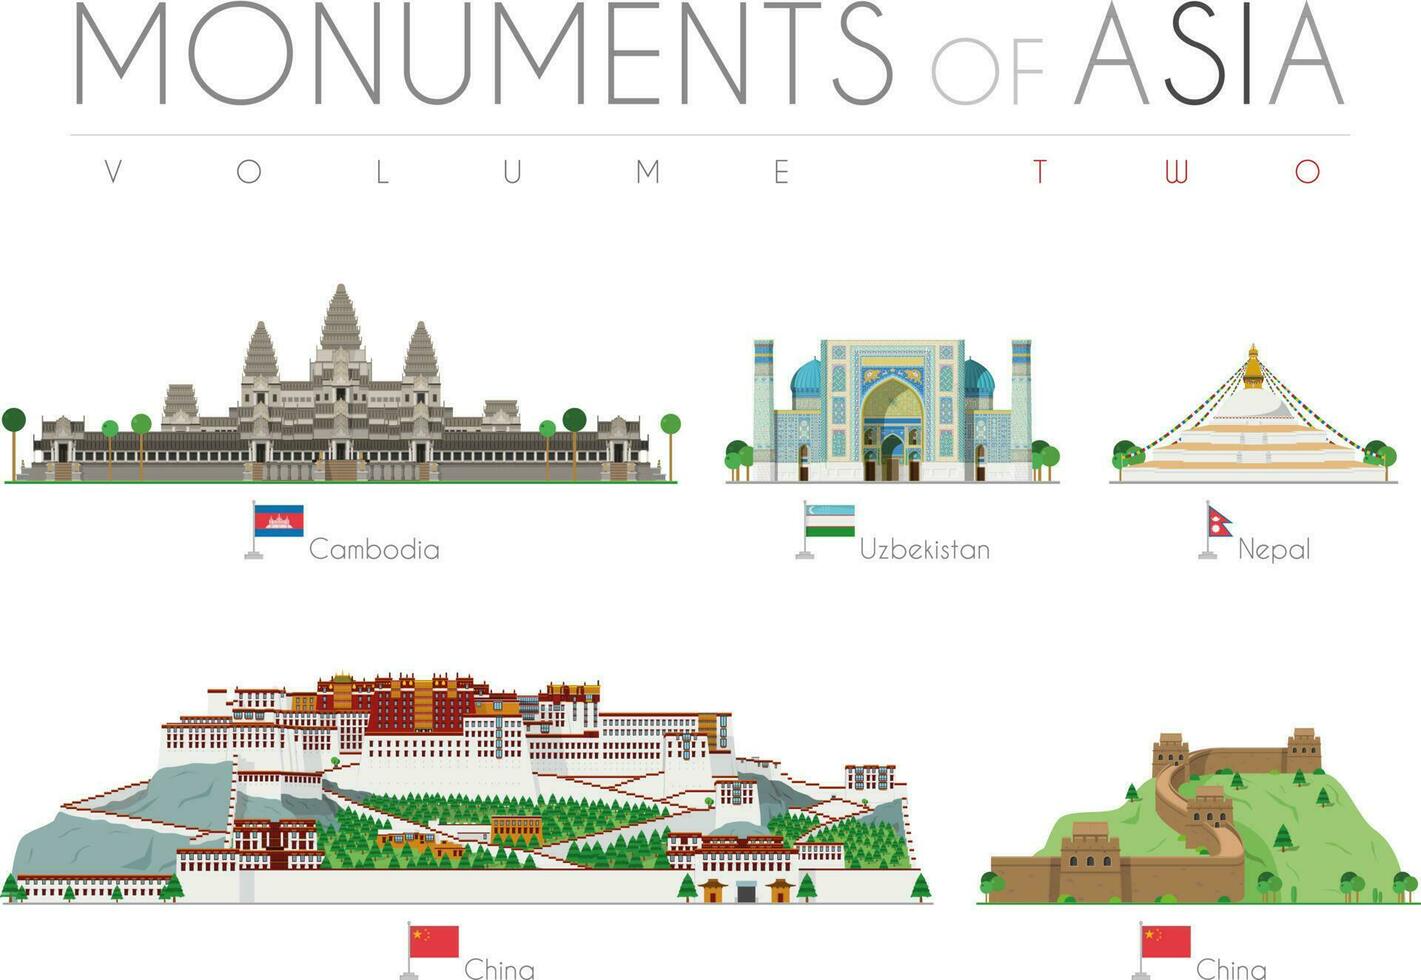 monumentos de Asia en dibujos animados estilo volumen 2. angkor murciélago - Camboya, ragastan Samrakand - uzbekistán, boudhanath estupa - Nepal, Potala palacio y genial pared - porcelana. vector ilustración